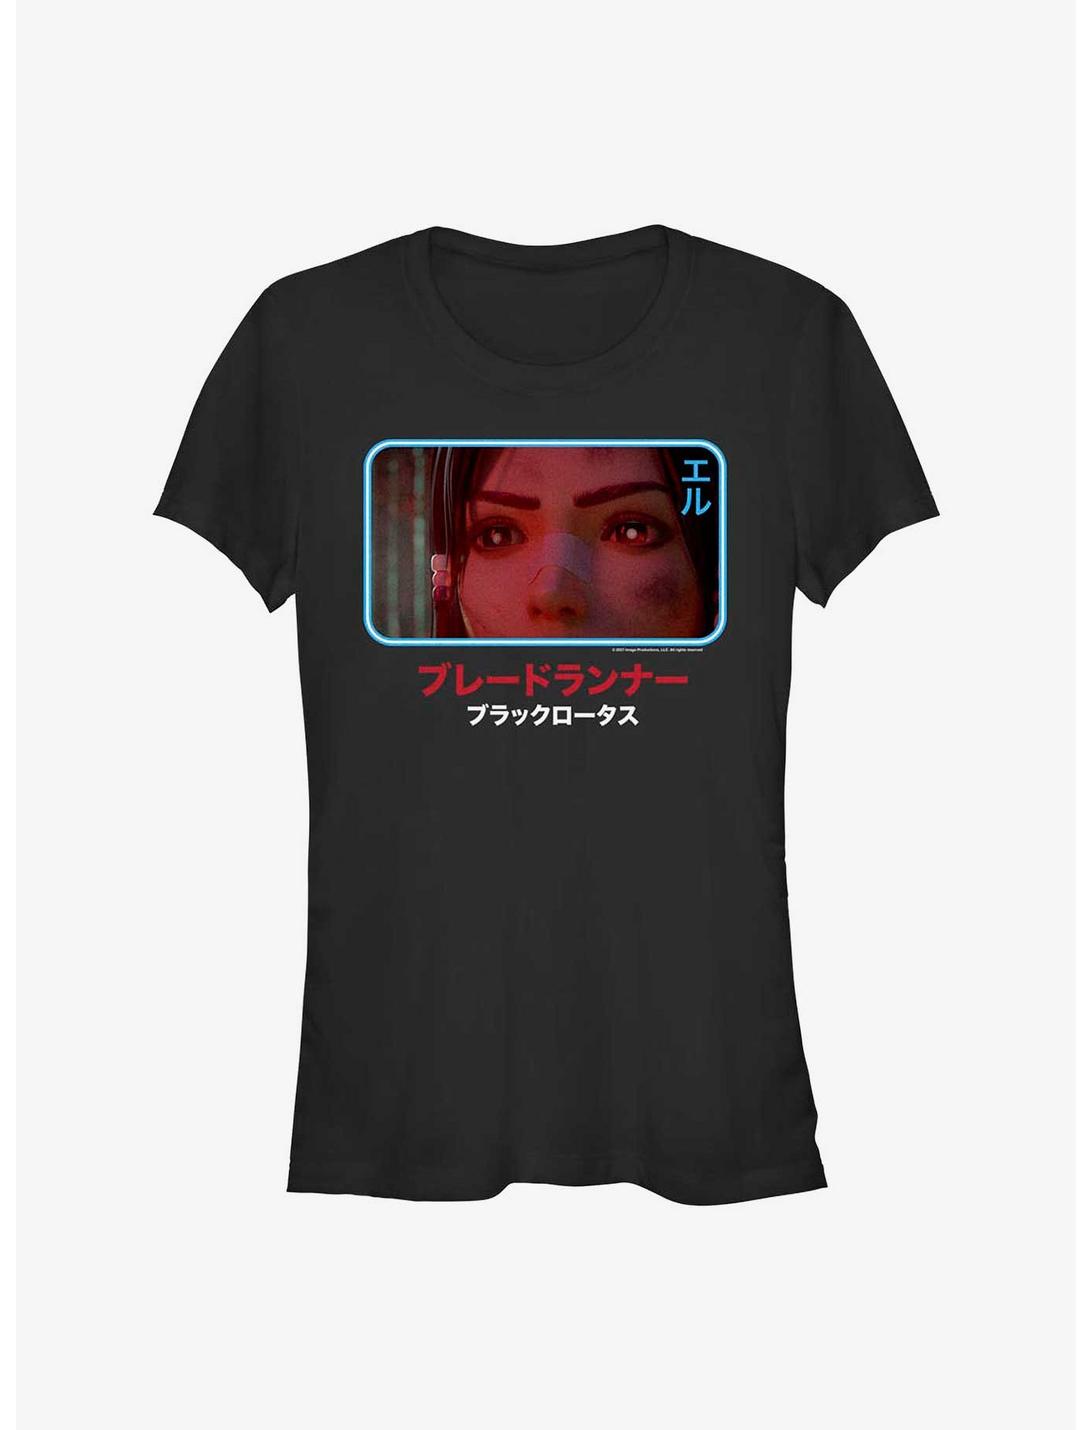 Blade Runner Replicant Girl's T-Shirt, BLACK, hi-res